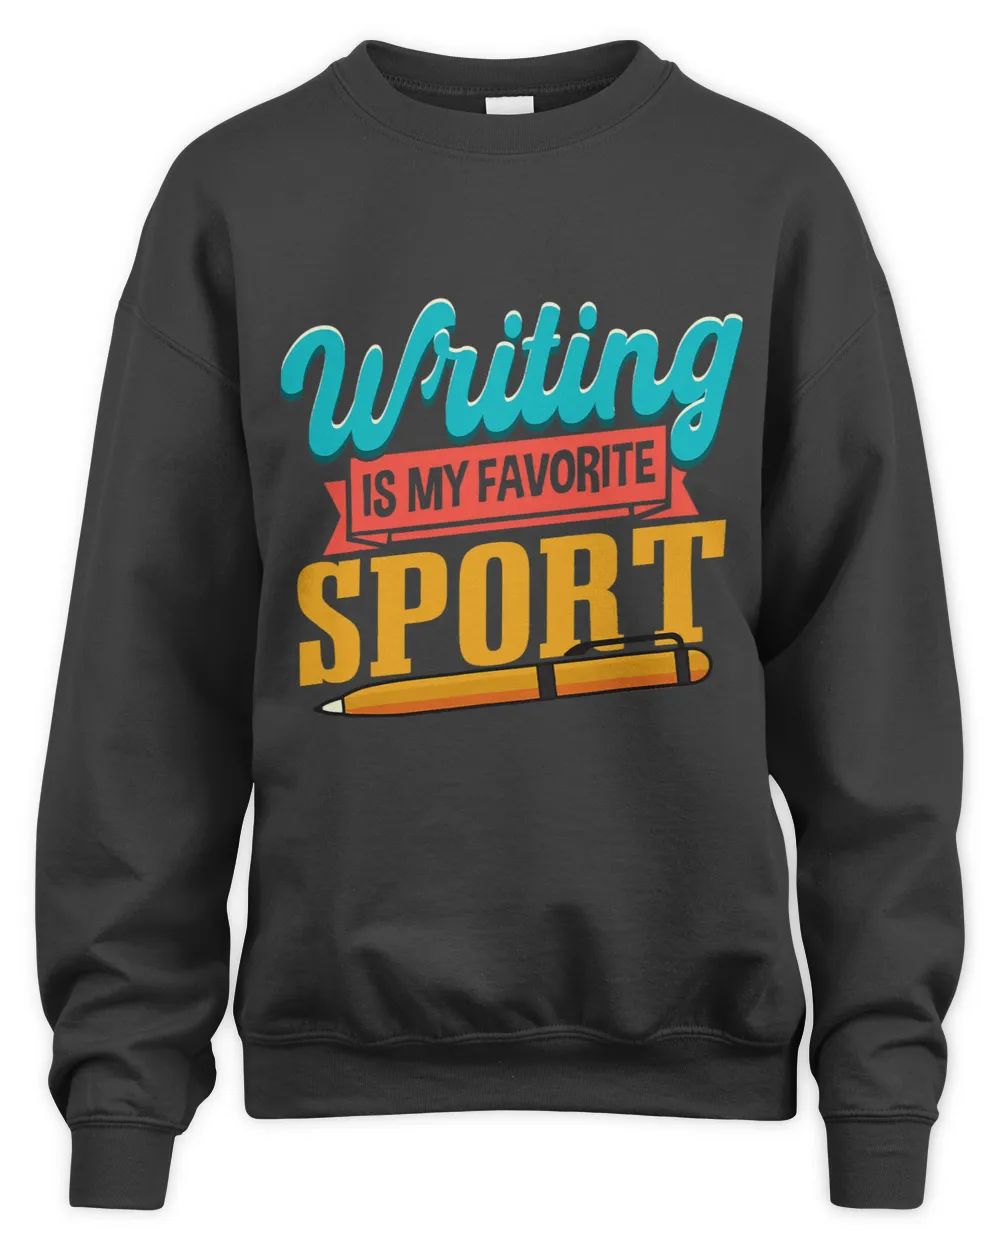 Writers Novelist Writing Is My Favorite Sport